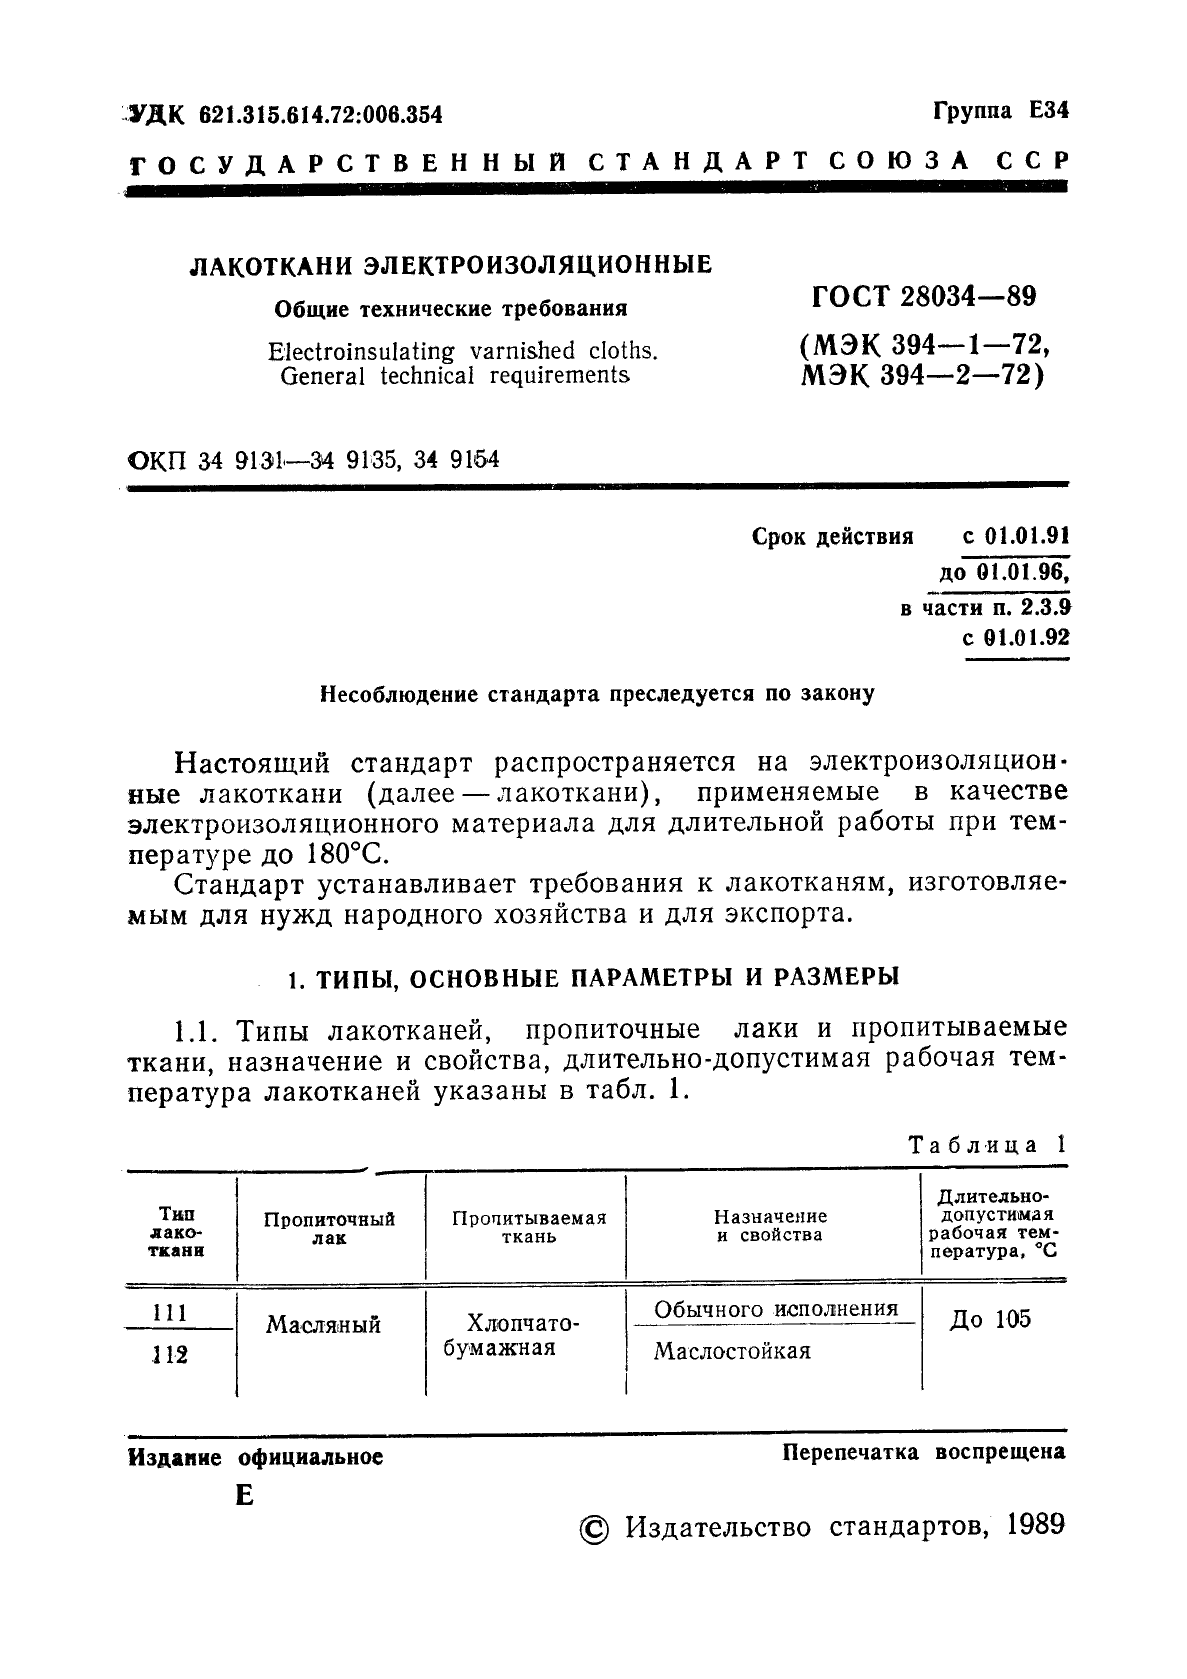 ГОСТ 28034-89